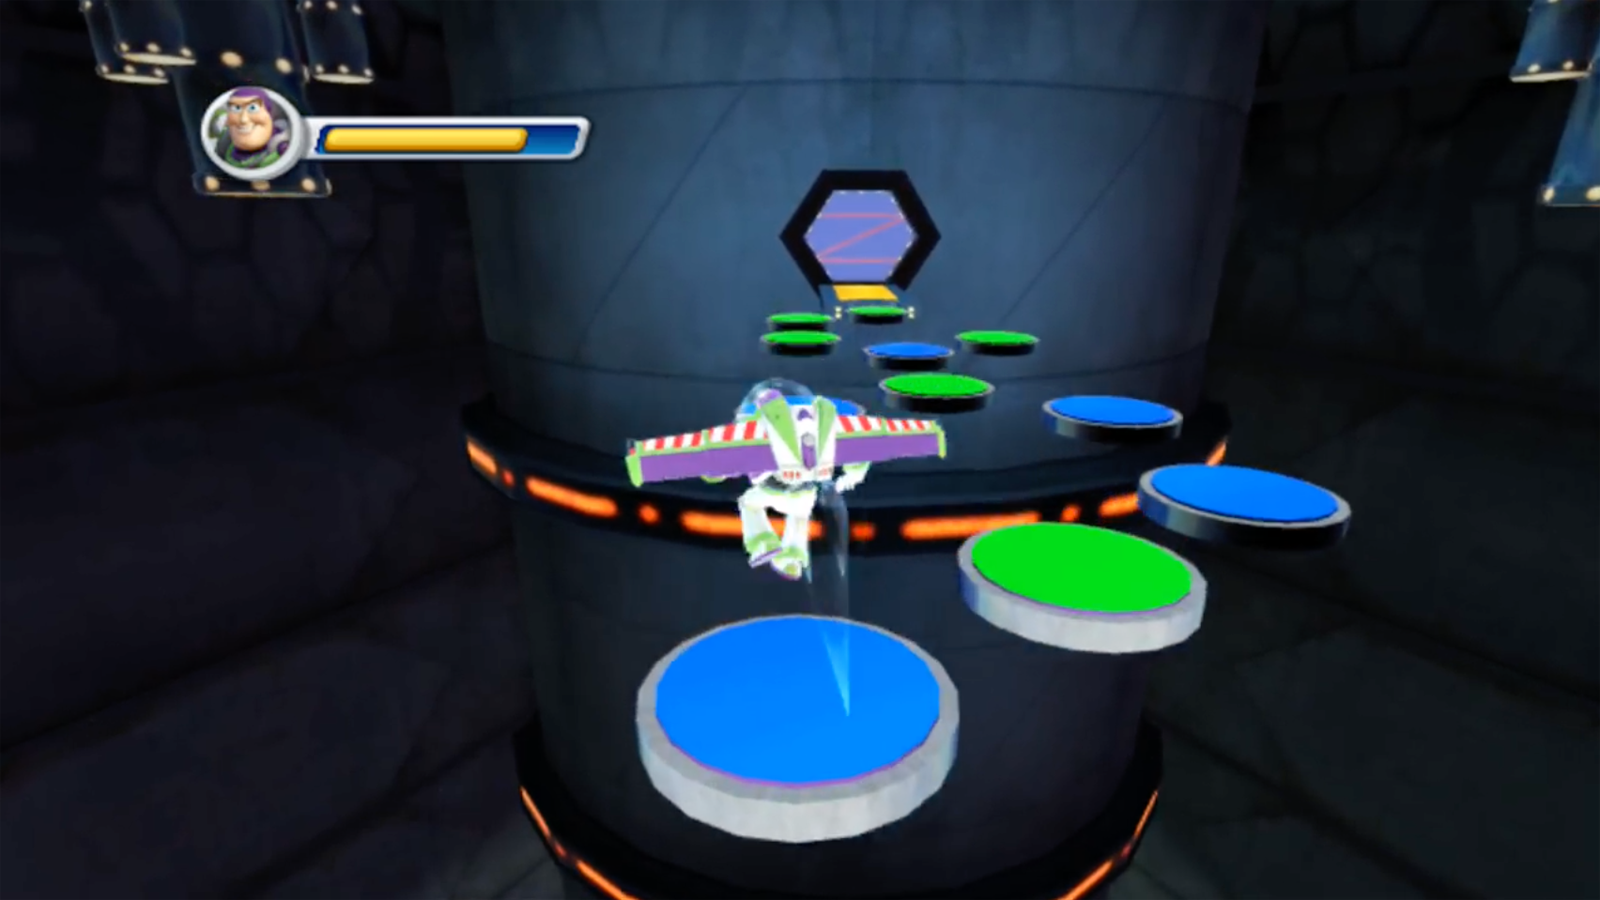 Screenshot 1 of Buzz Lightyear: Câu chuyện đồ chơi 1.0